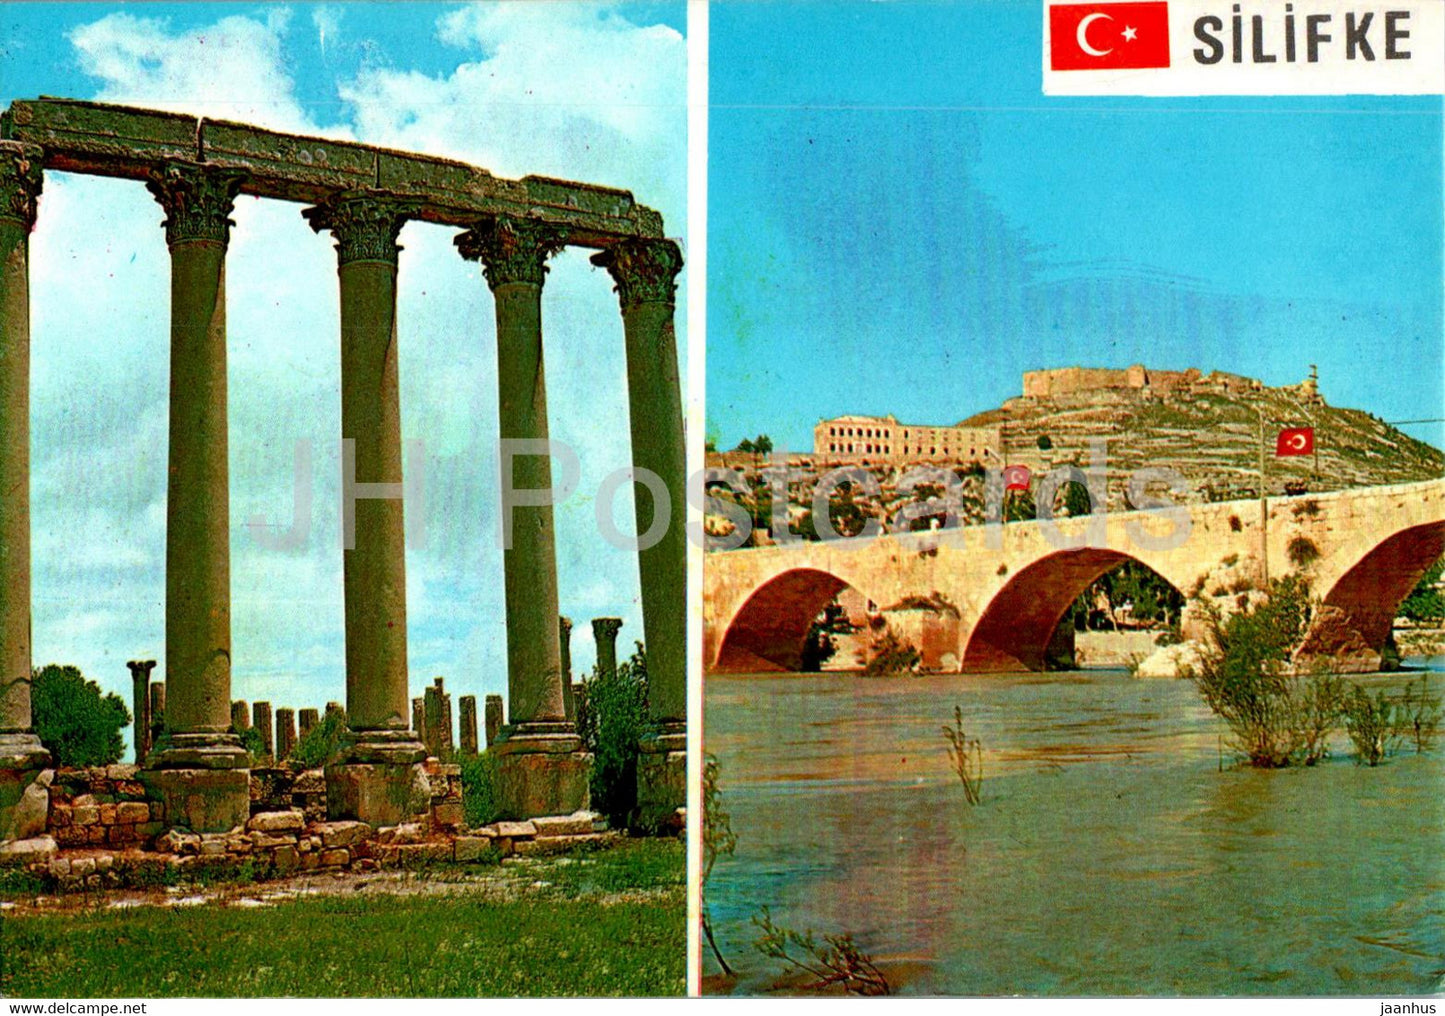 Silifke - Bridge and the Fortress - Turkey - unused - JH Postcards